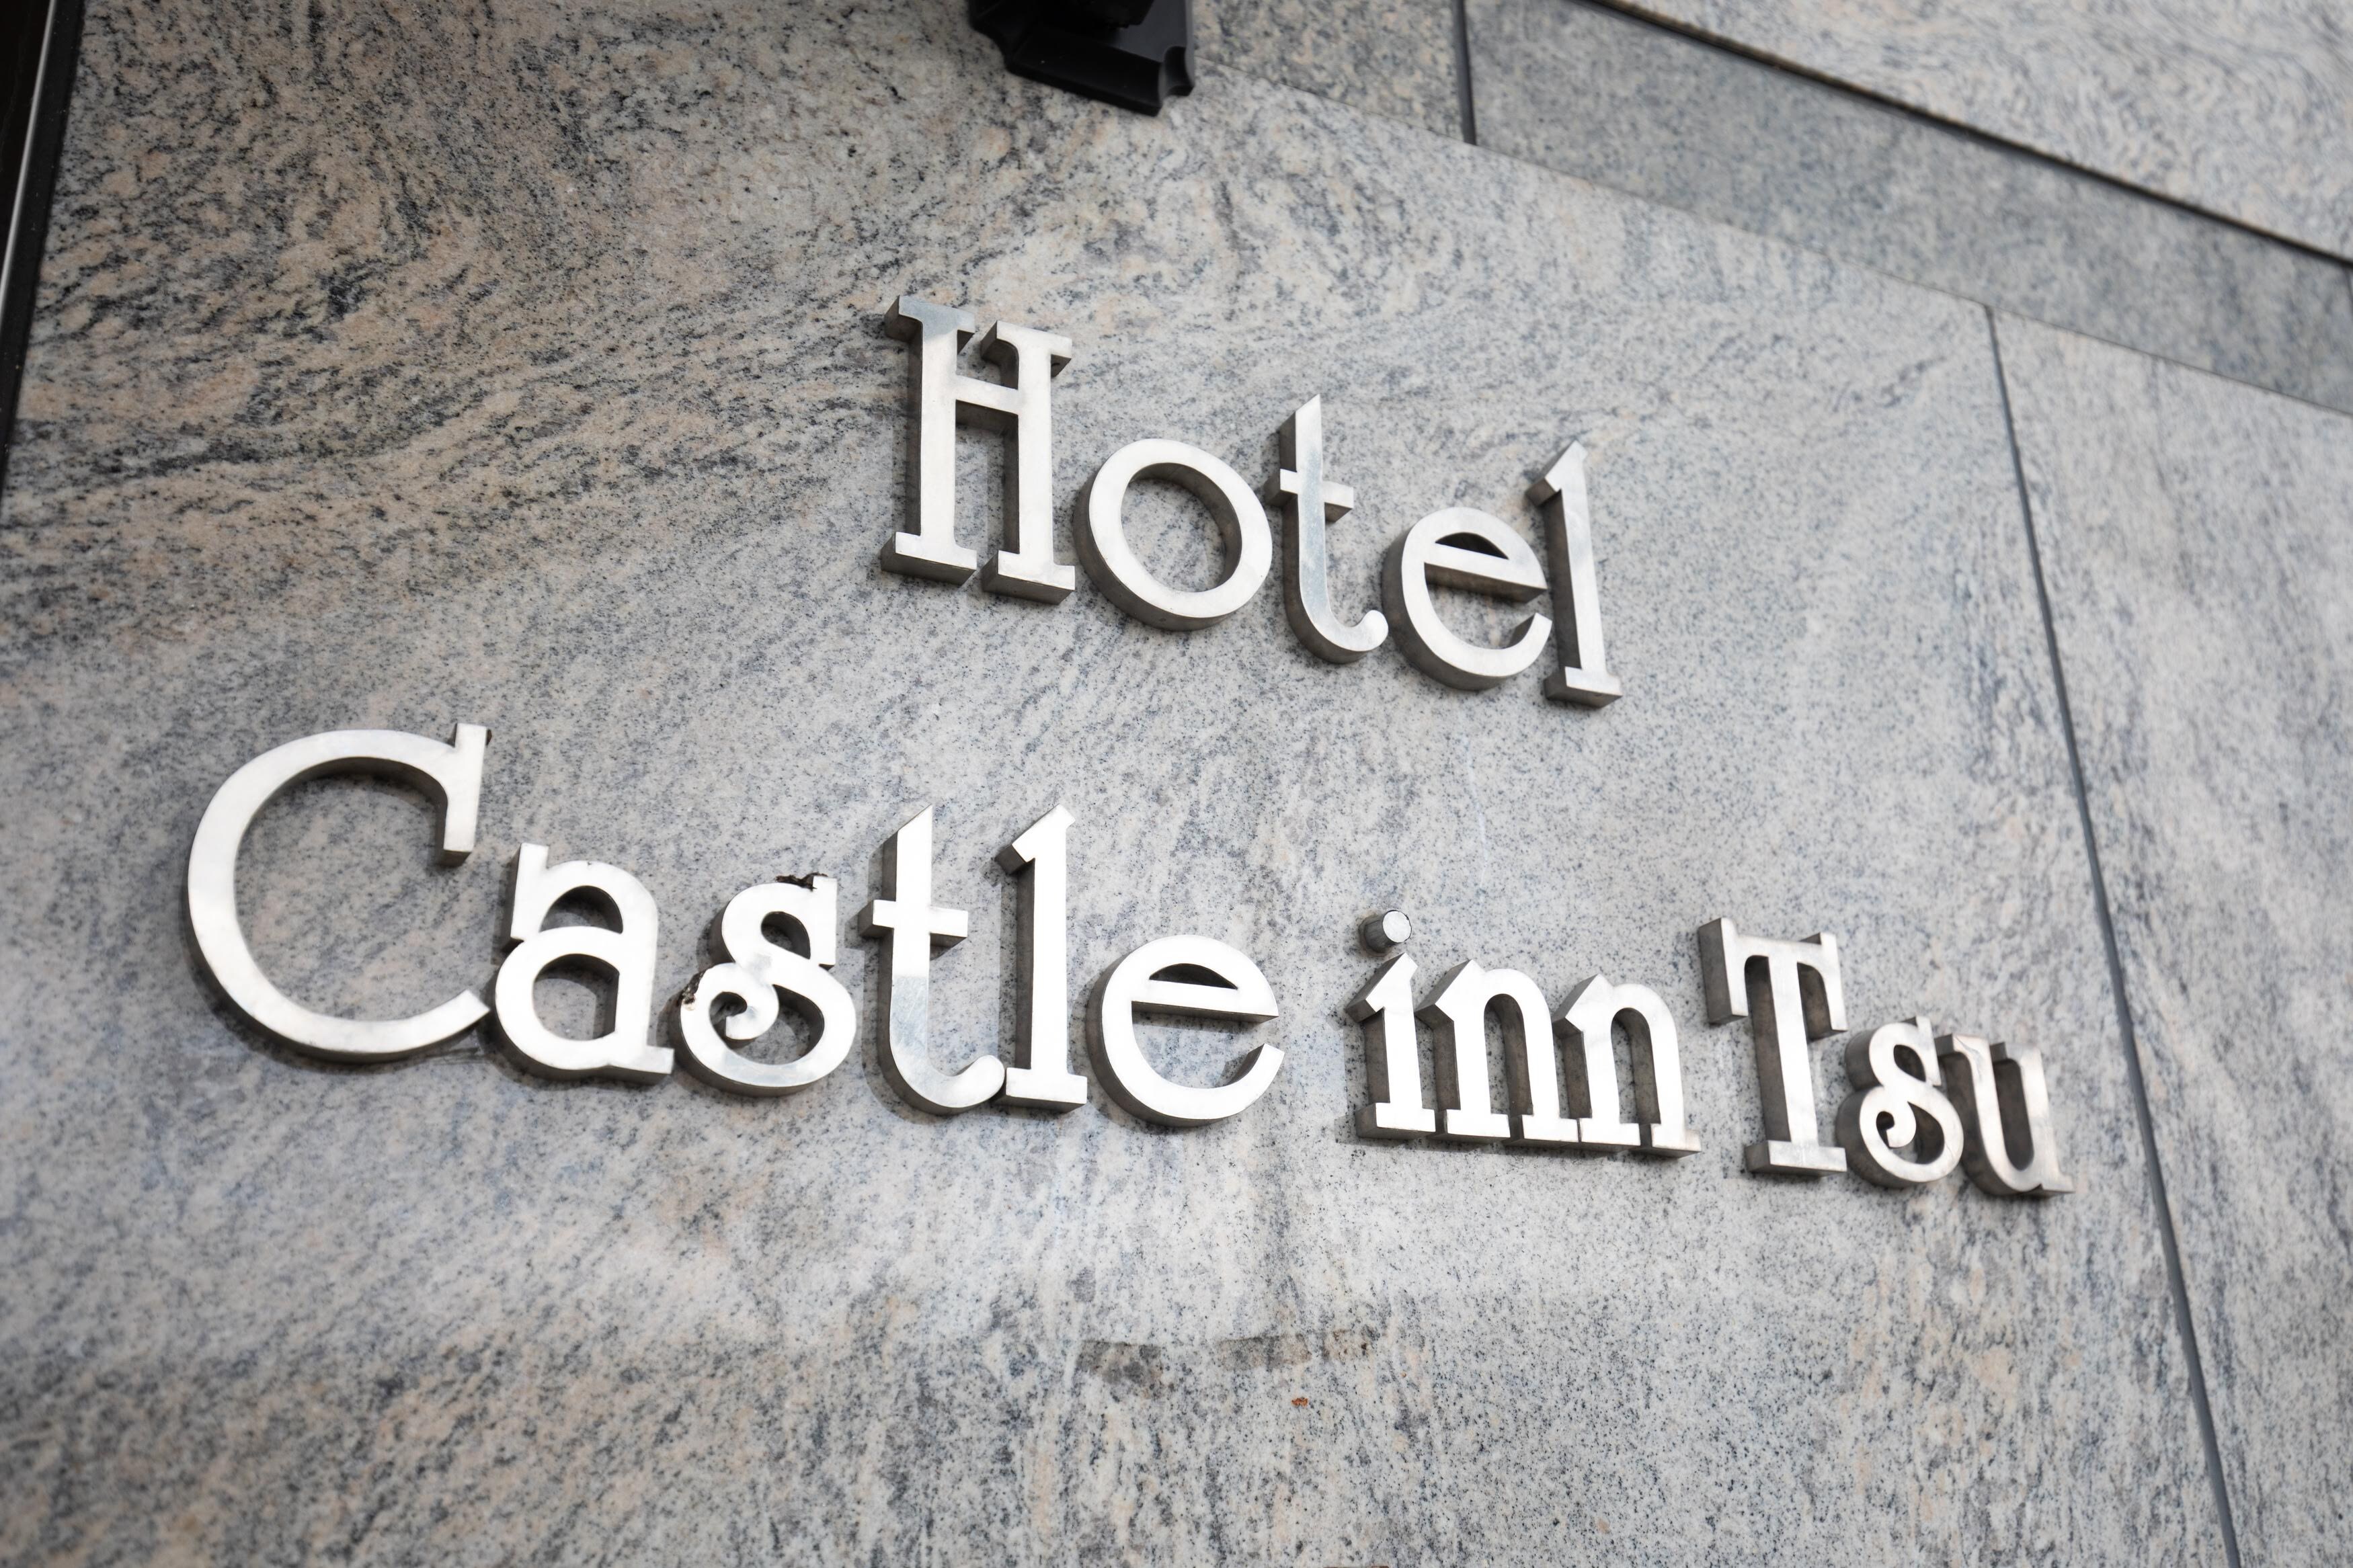 Hotel Castle Inn Tsu